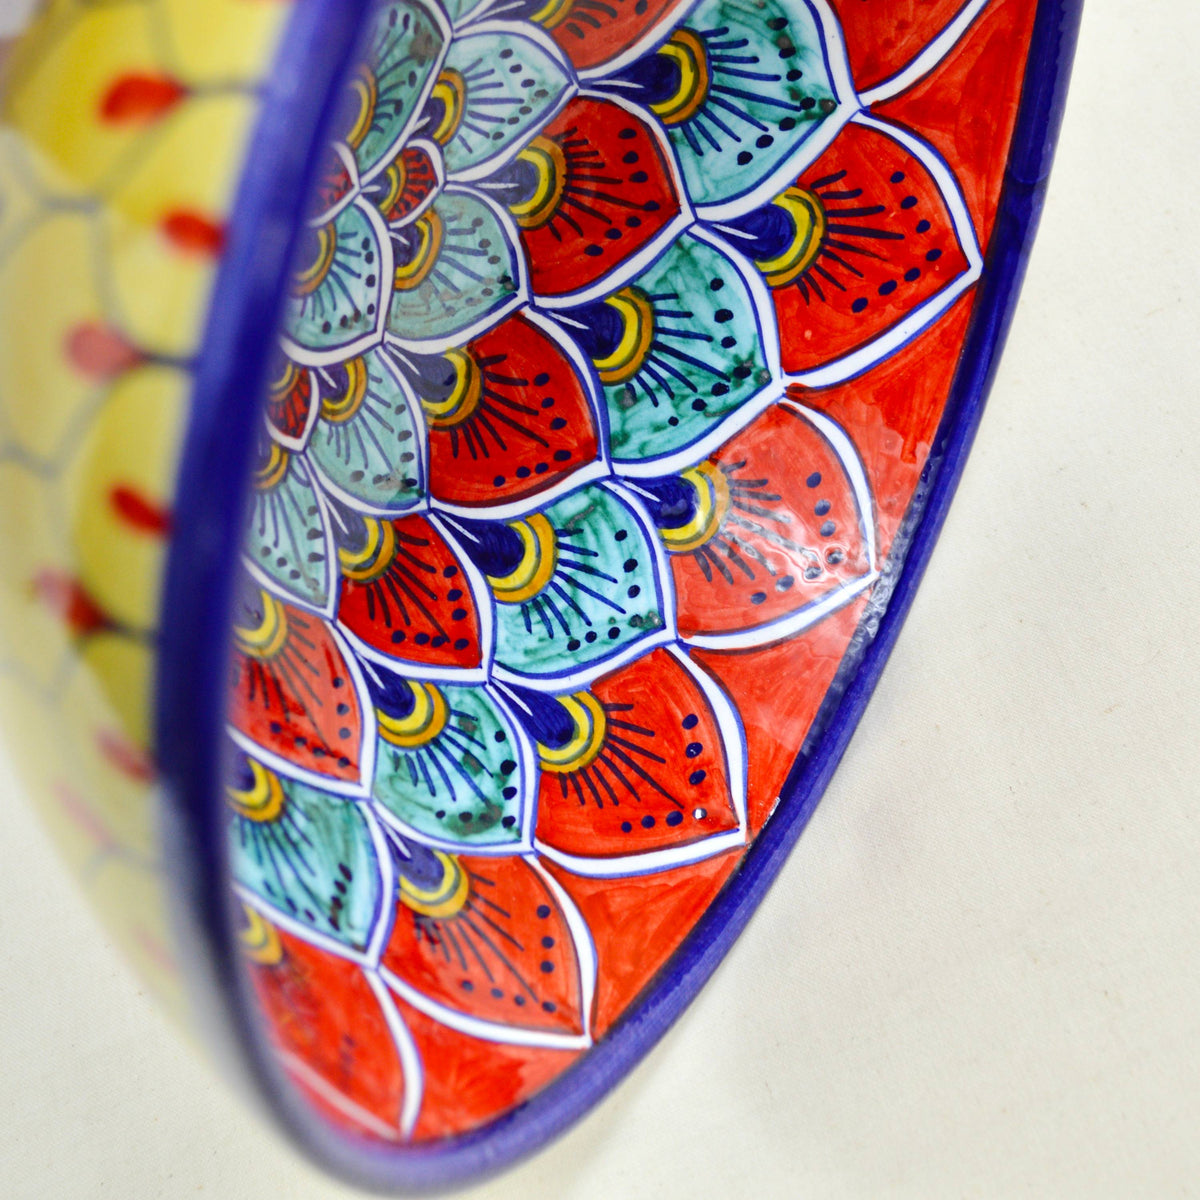 Alba Ceramic Round Serving Bowl Made in Deruta, Italy - My Italian Decor